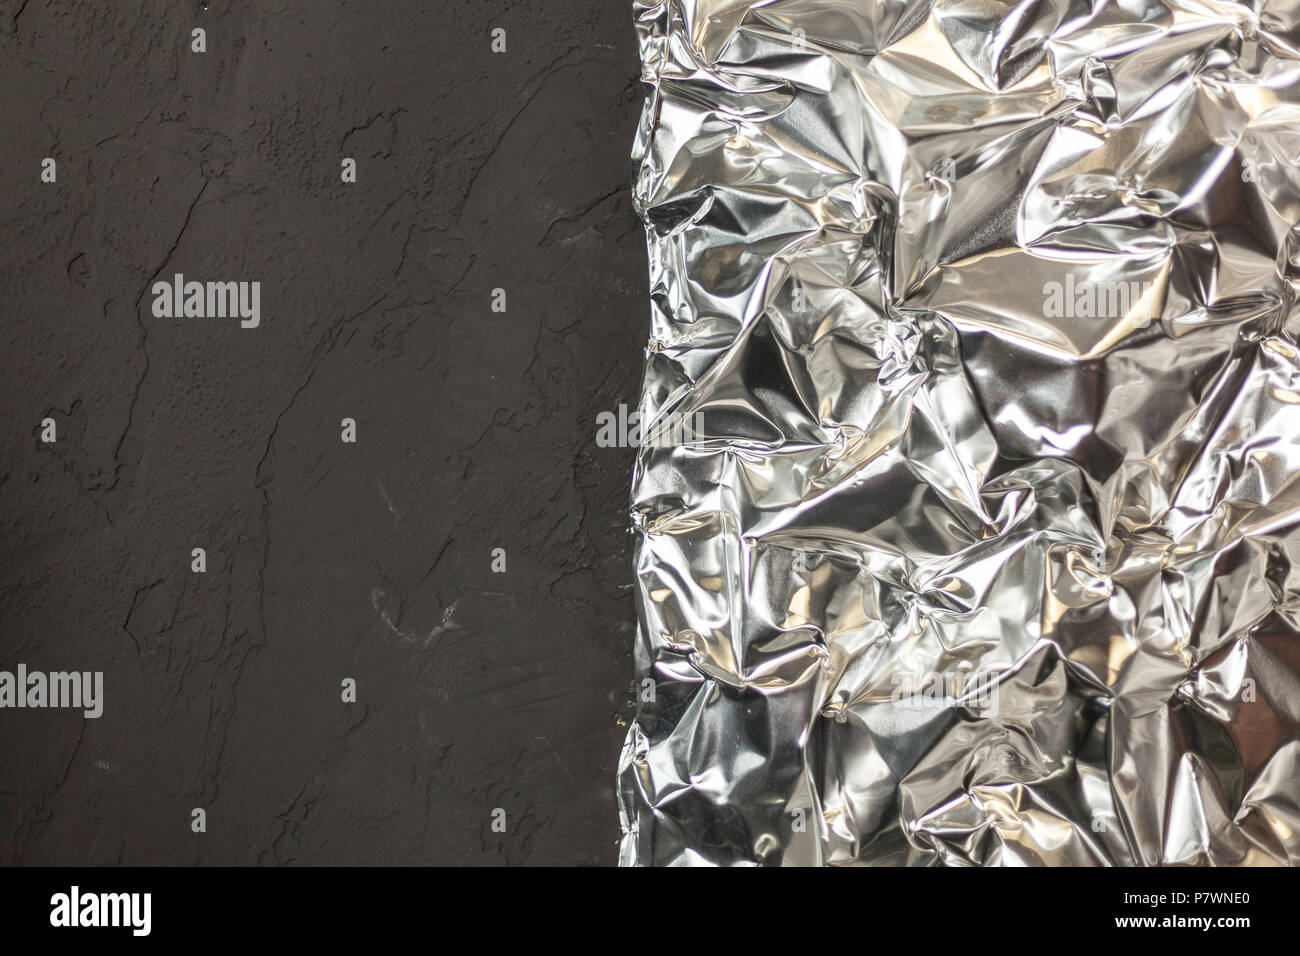 https://c8.alamy.com/comp/P7WNE0/full-frame-take-of-a-sheet-of-crumpled-silver-aluminum-foil-background-P7WNE0.jpg